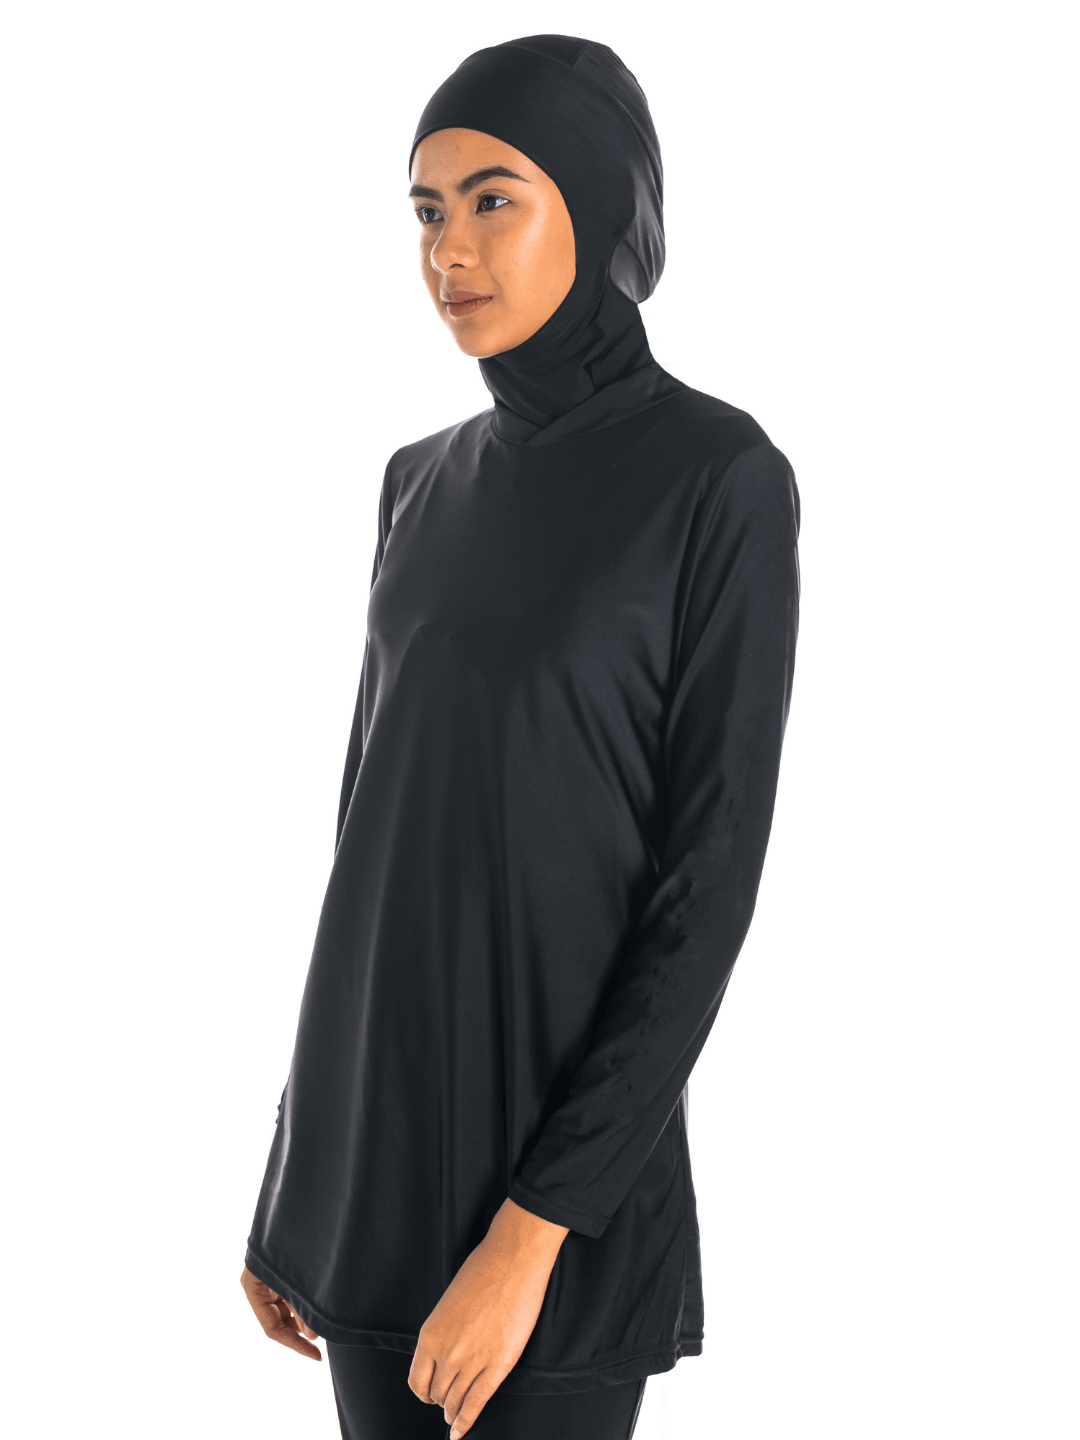 Modernly Modest Melur Muslimah Swimwear Set Black (Plus Size Available) - Pink N' Proper